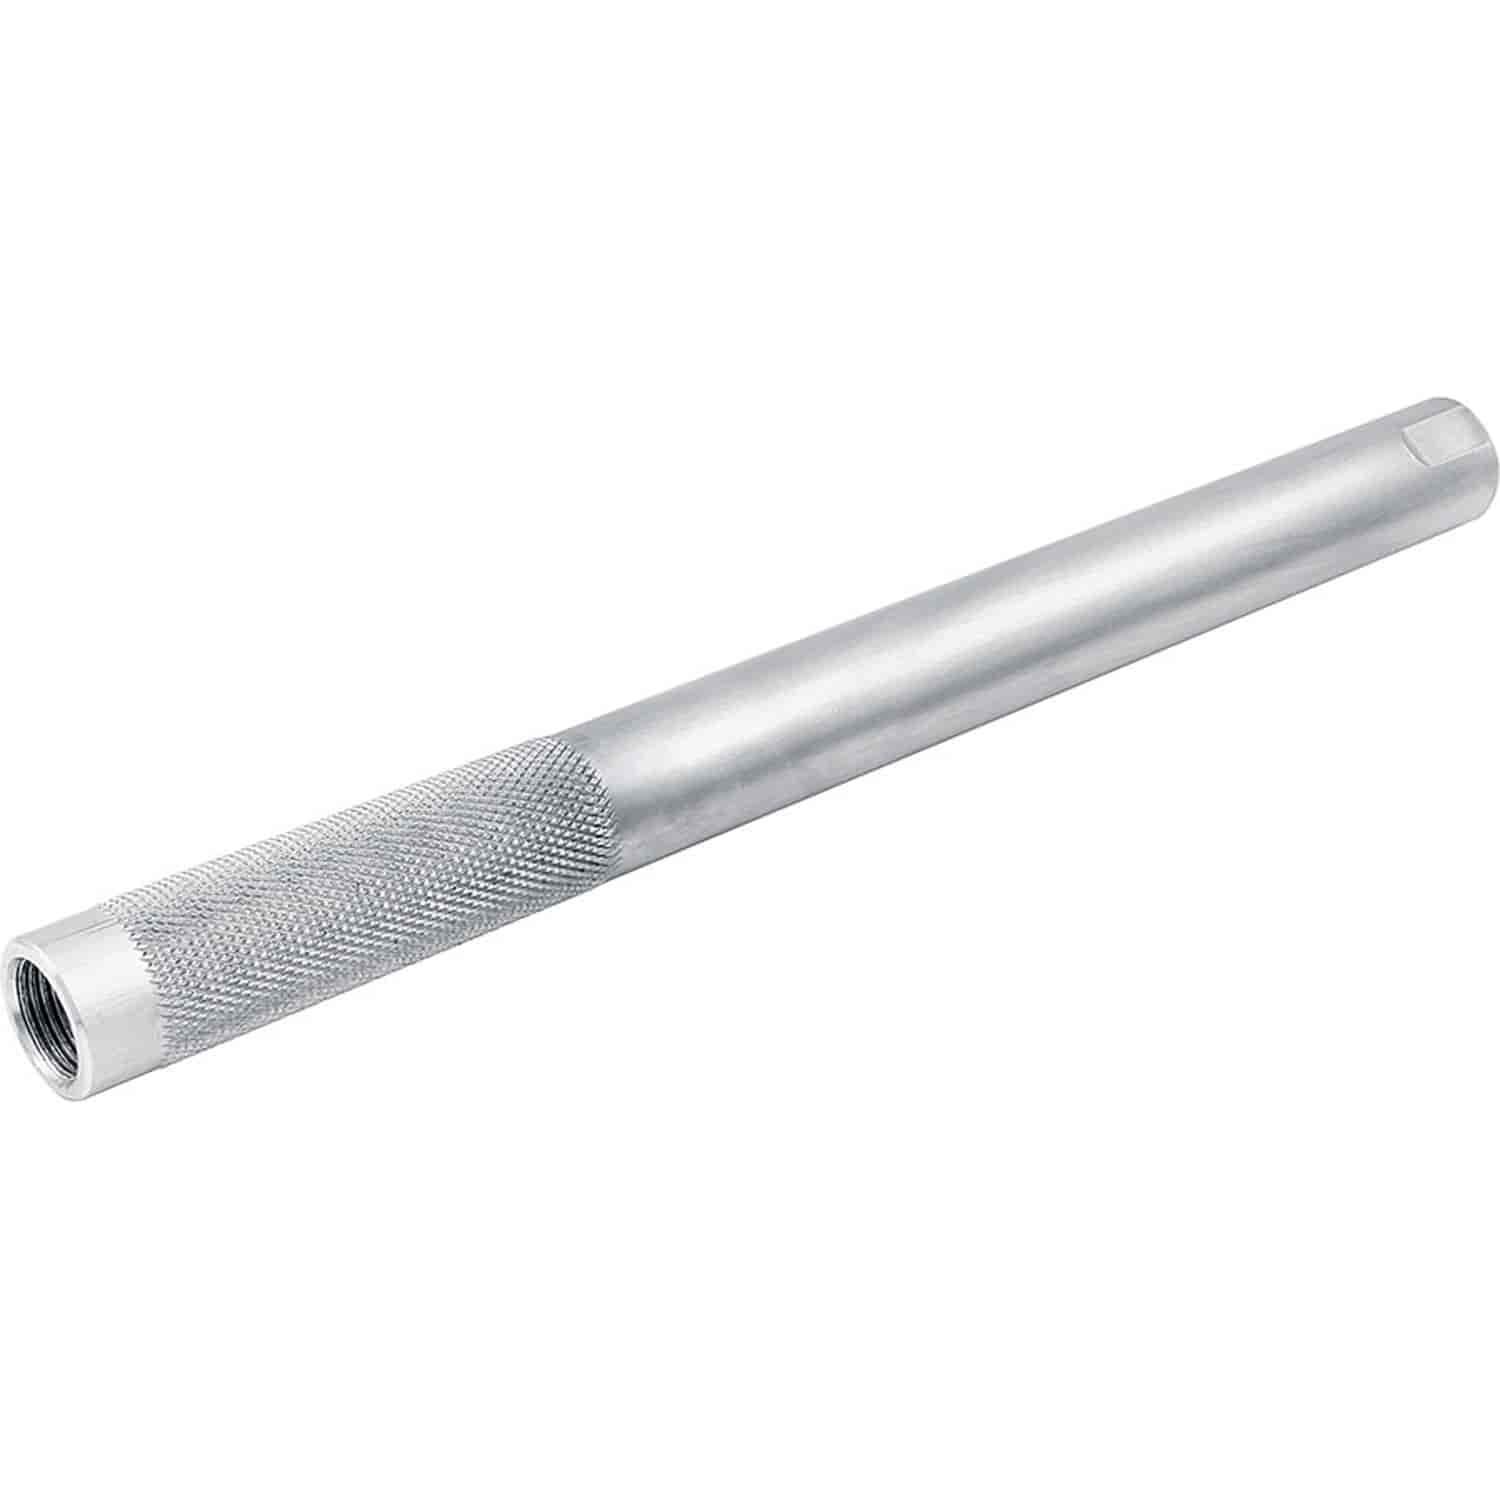 Swedged Aluminum Tie Rod Tube Length: 23"